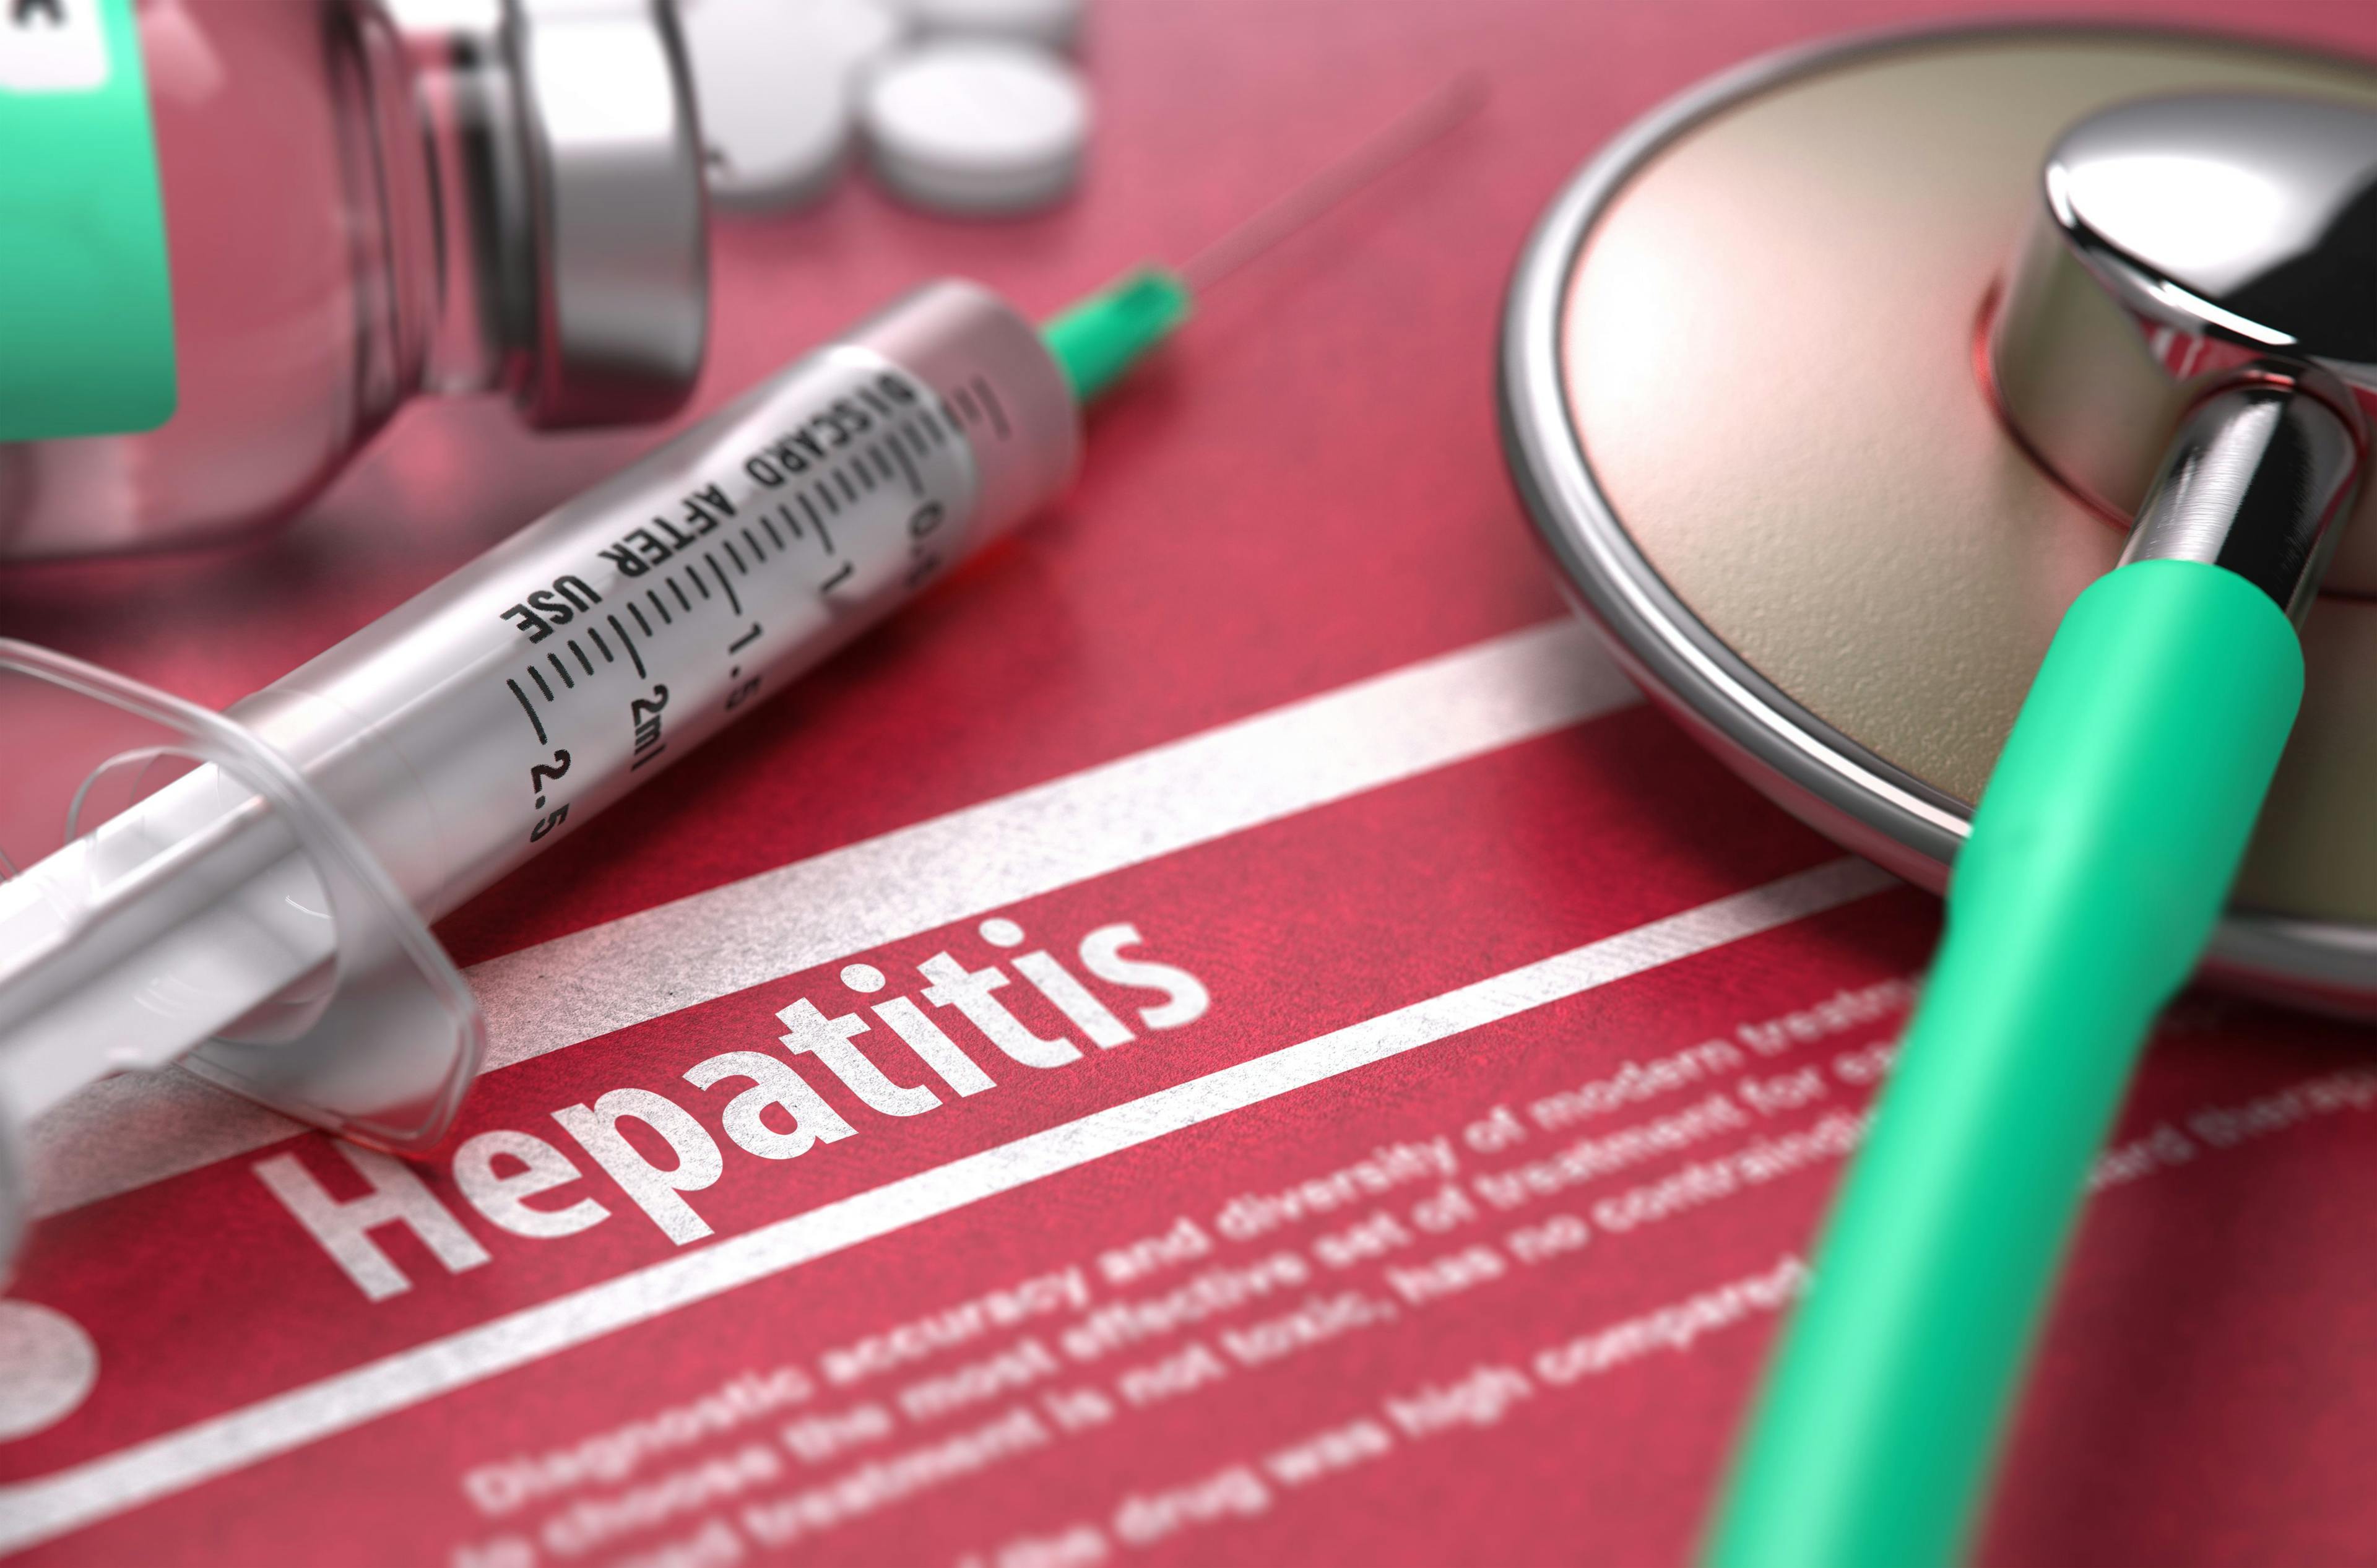 Hepatitis. Medical Concept on Red Background. | Image Credit: tashatuvango - stock.adobe.com